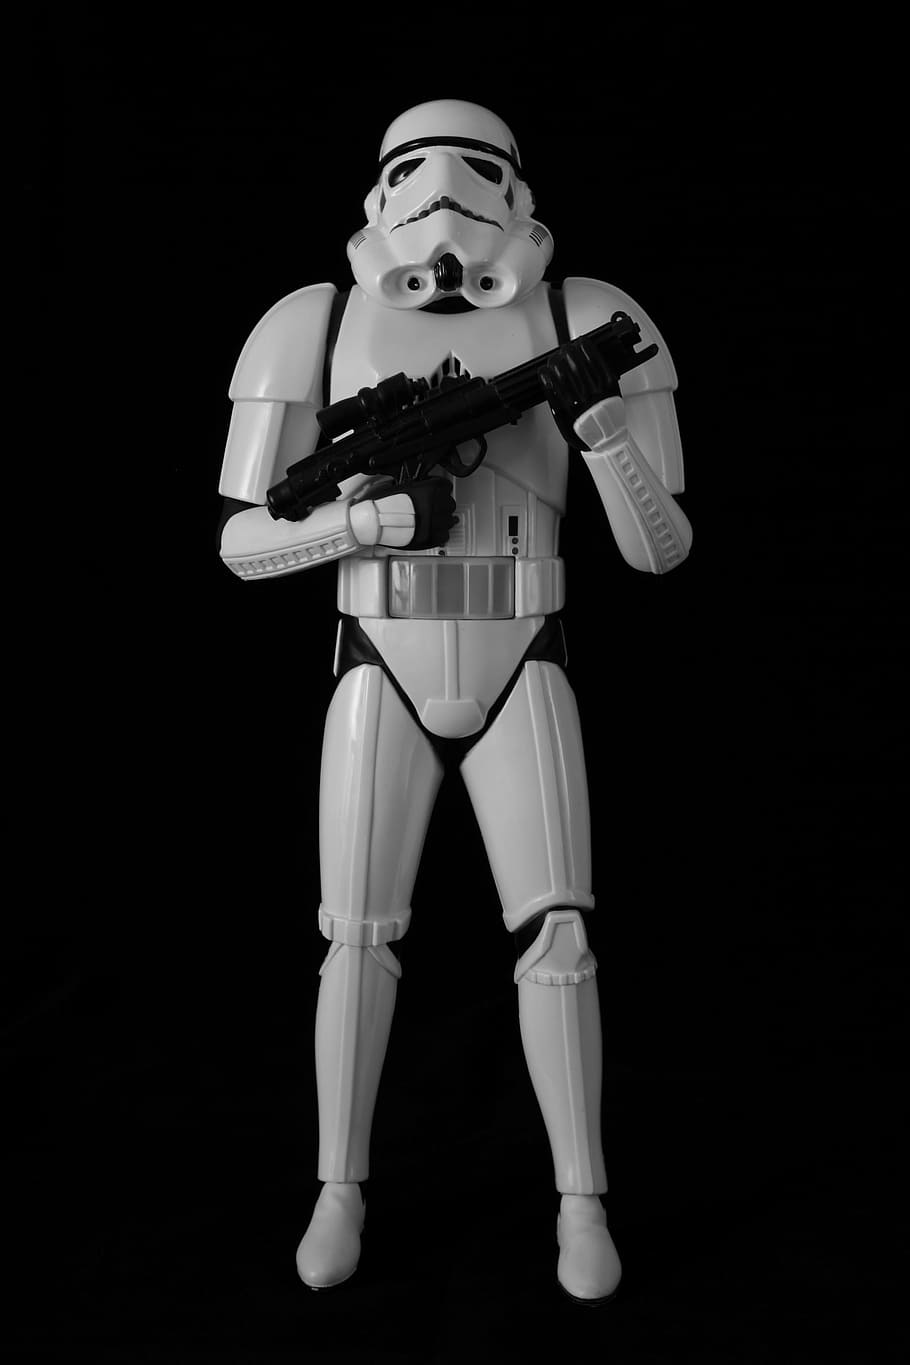 Star Wars Stormtrooper action figurine against black background